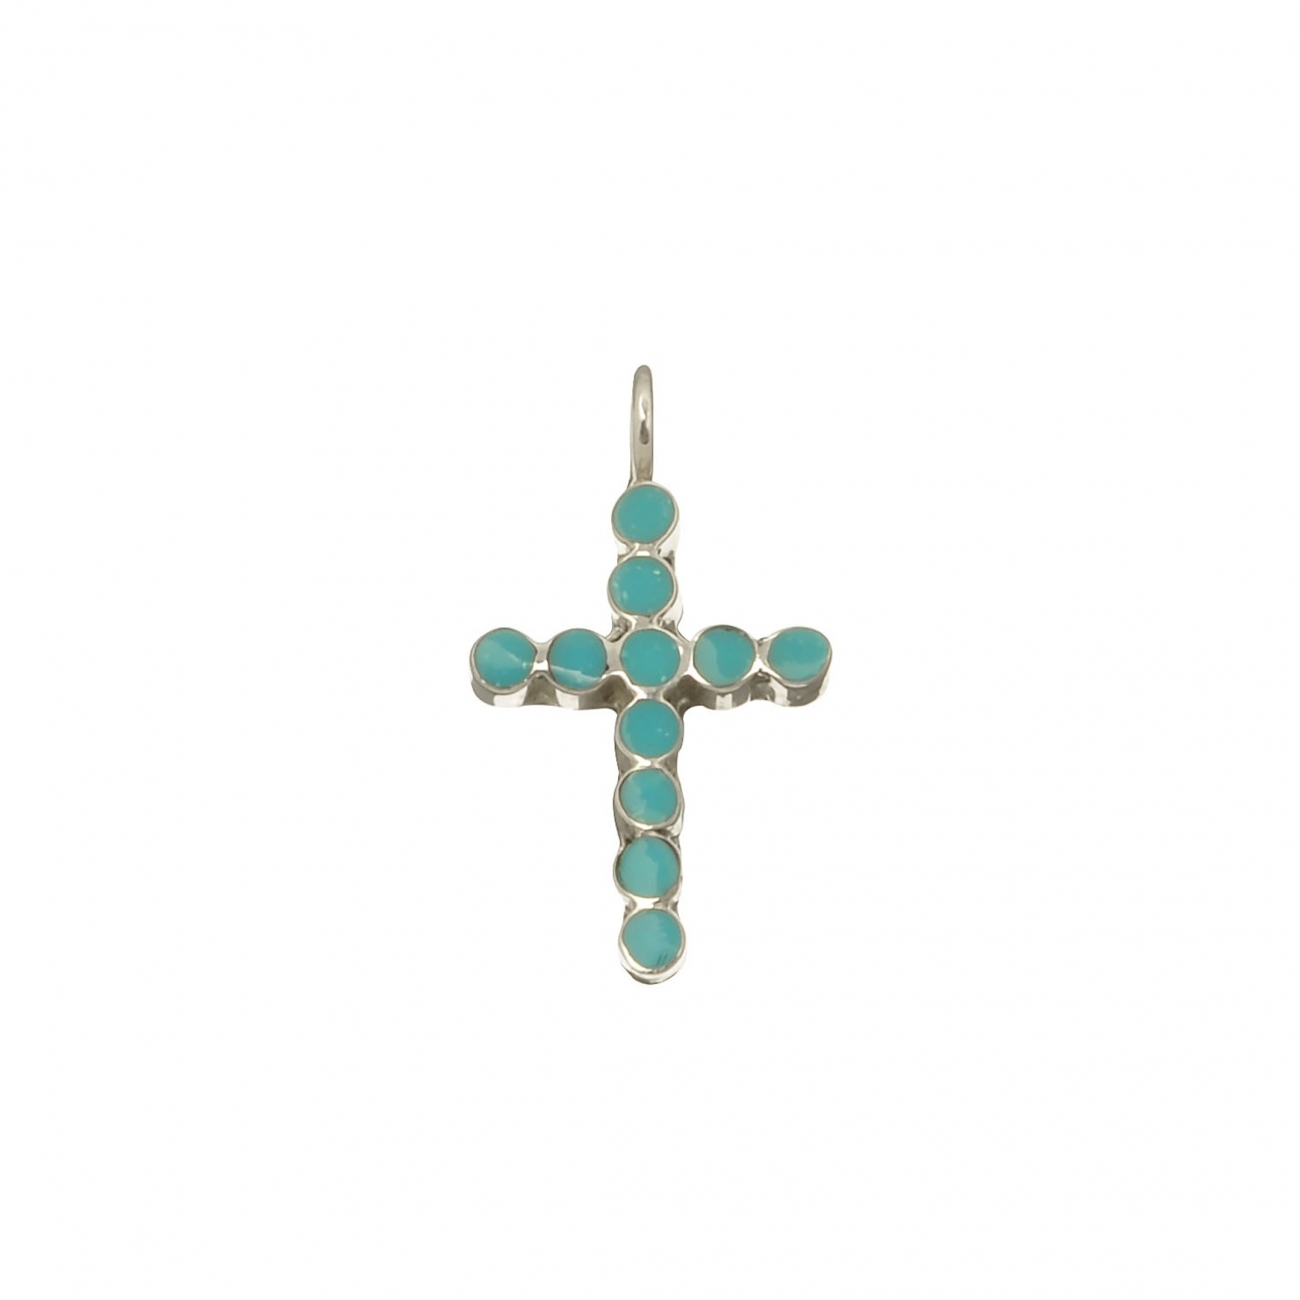 Harpo Paris pendant PE187 cross in turquoise and silver